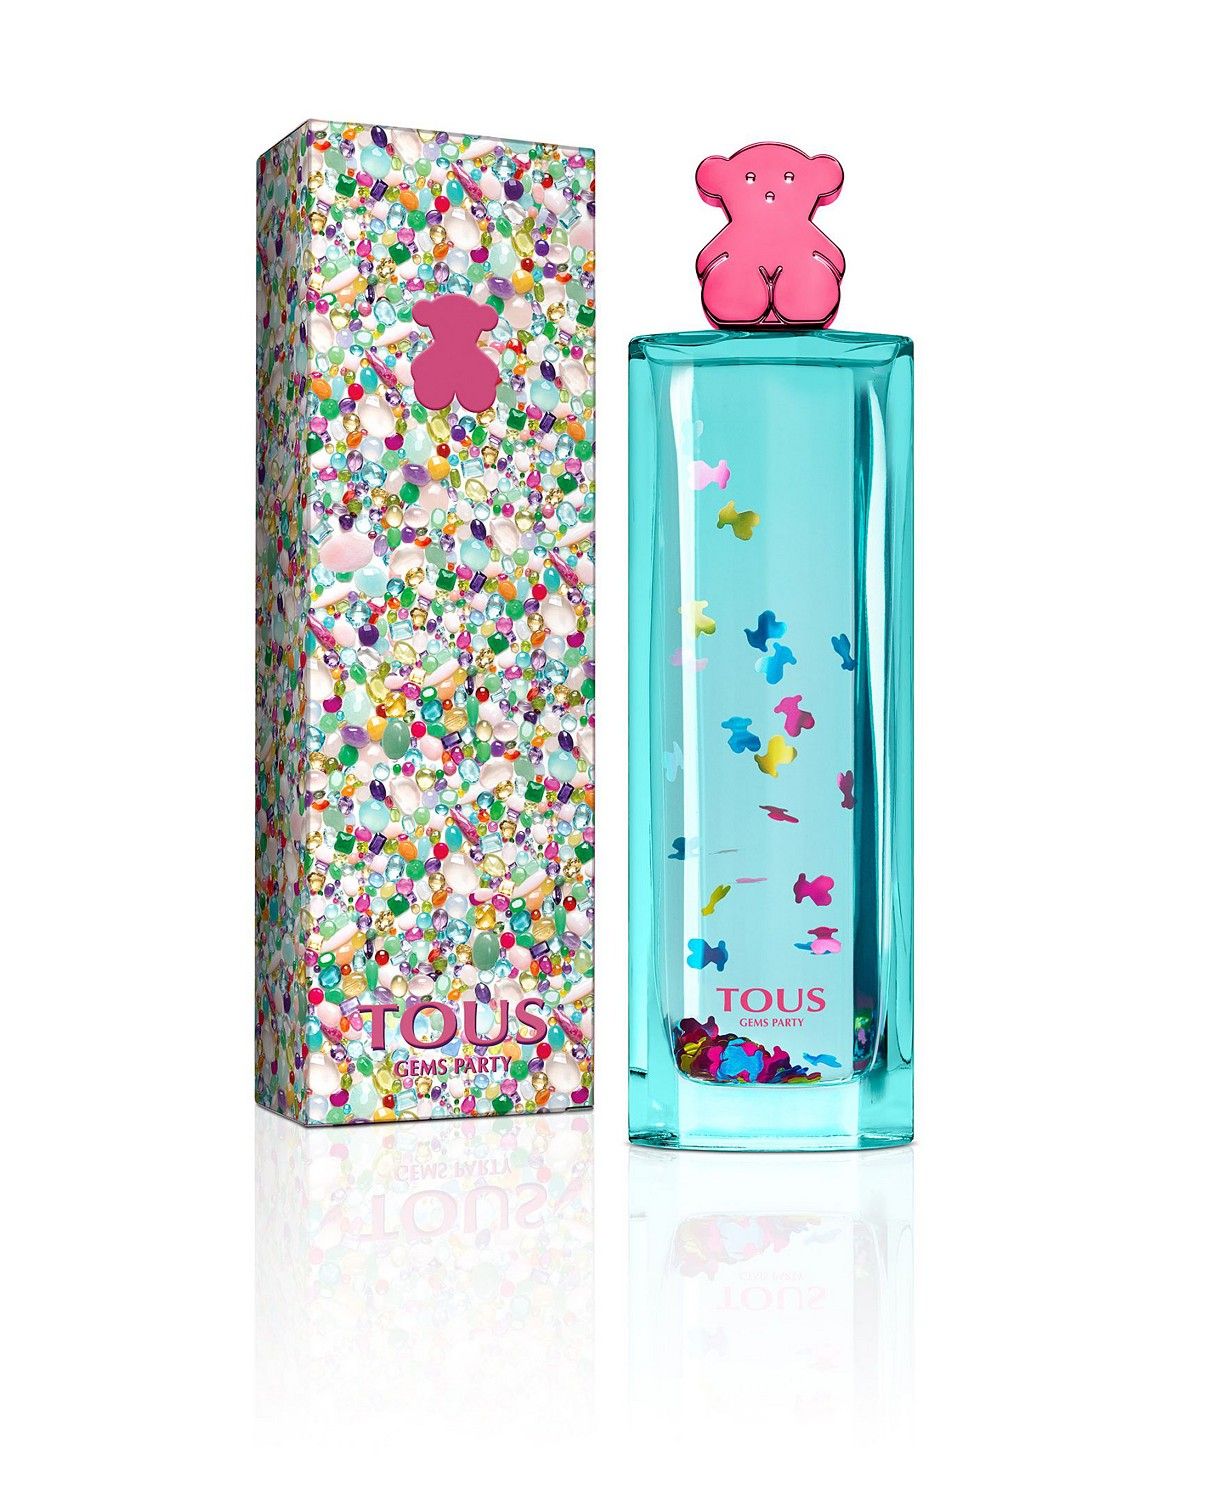 Tous Gems Party Tous perfume - a new fragrance for women 2021